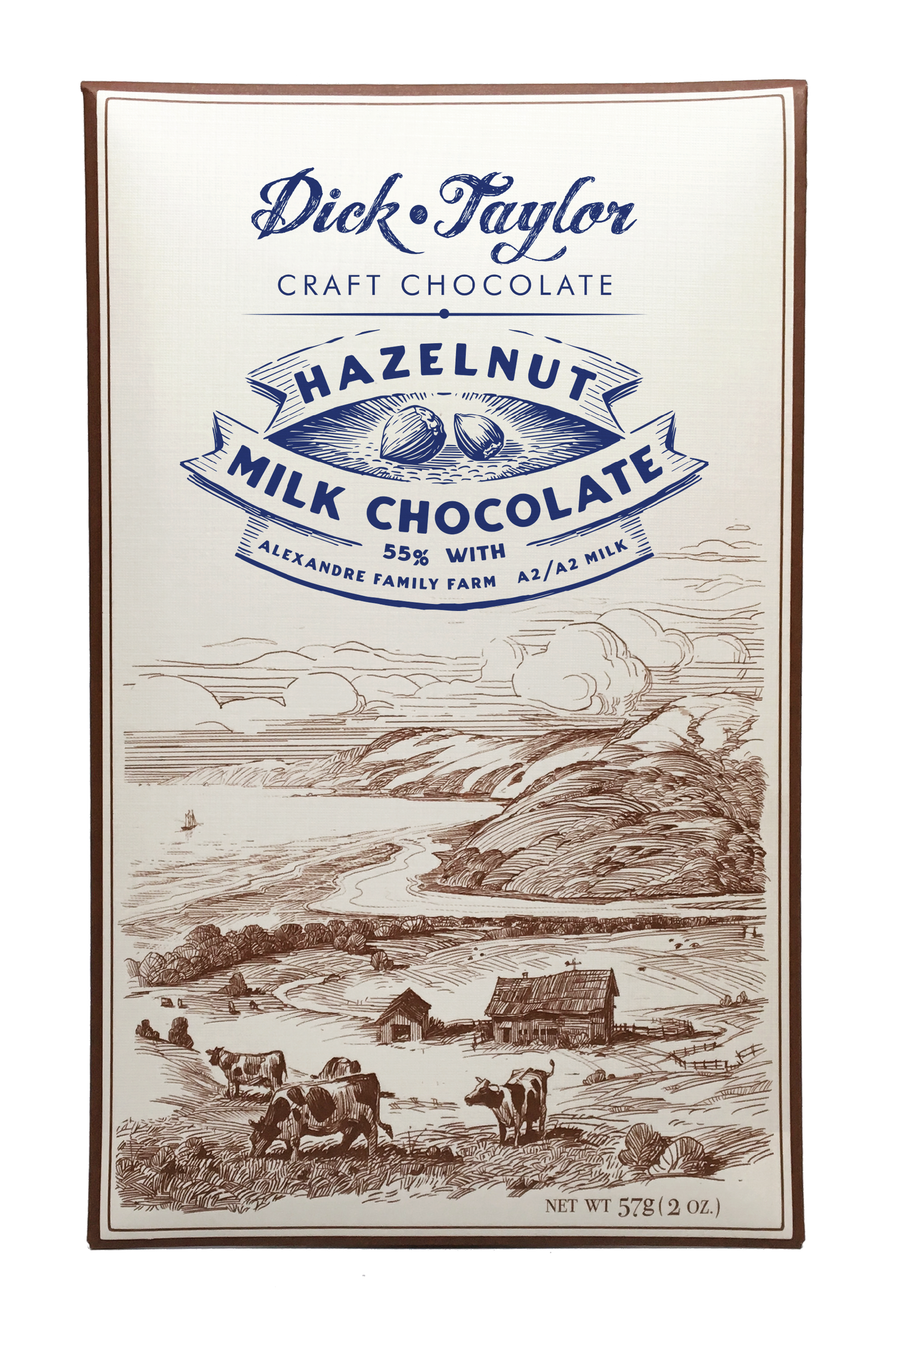 Dick Taylor 55% Hazelnut Milk Chocolate